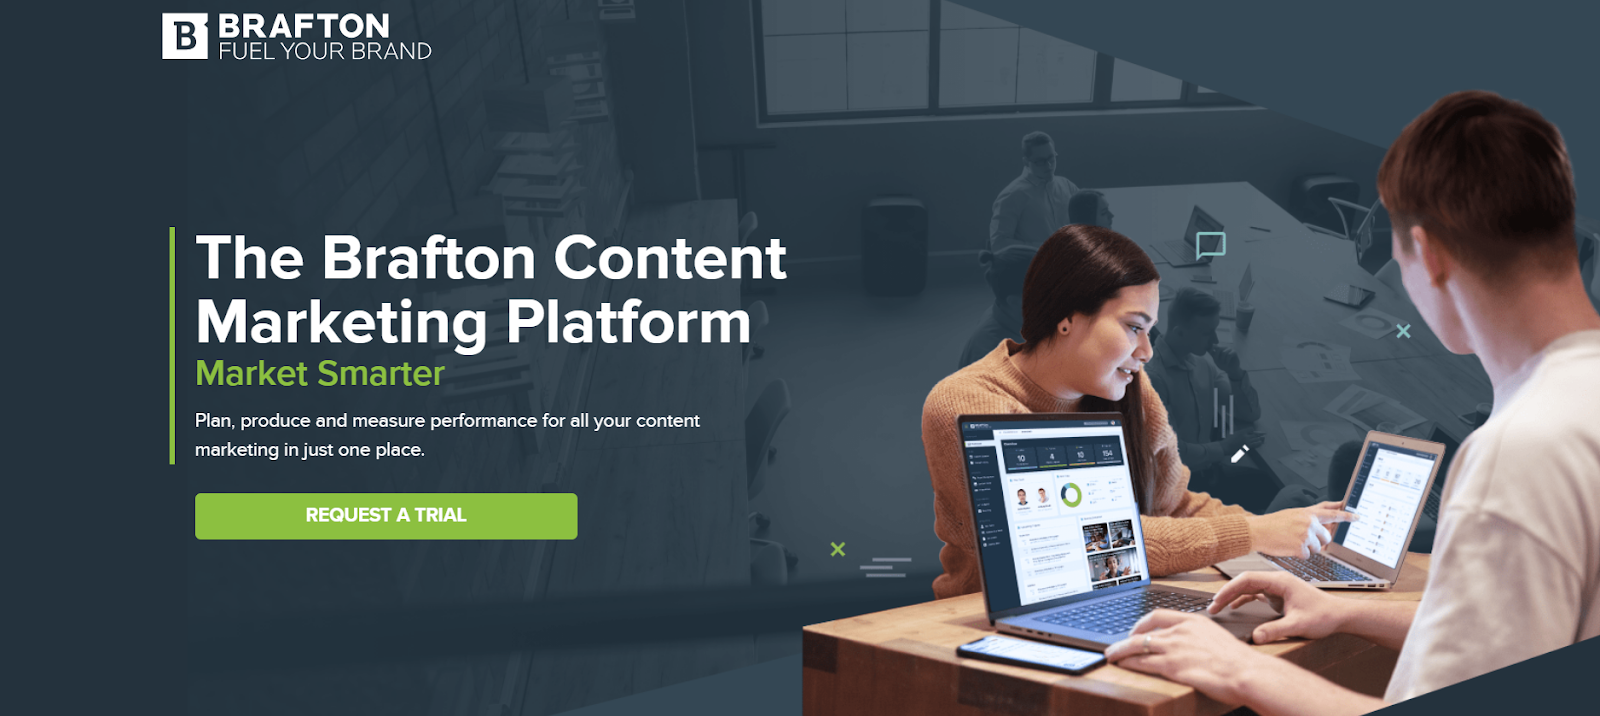 The Brafton Content Marketing Platform